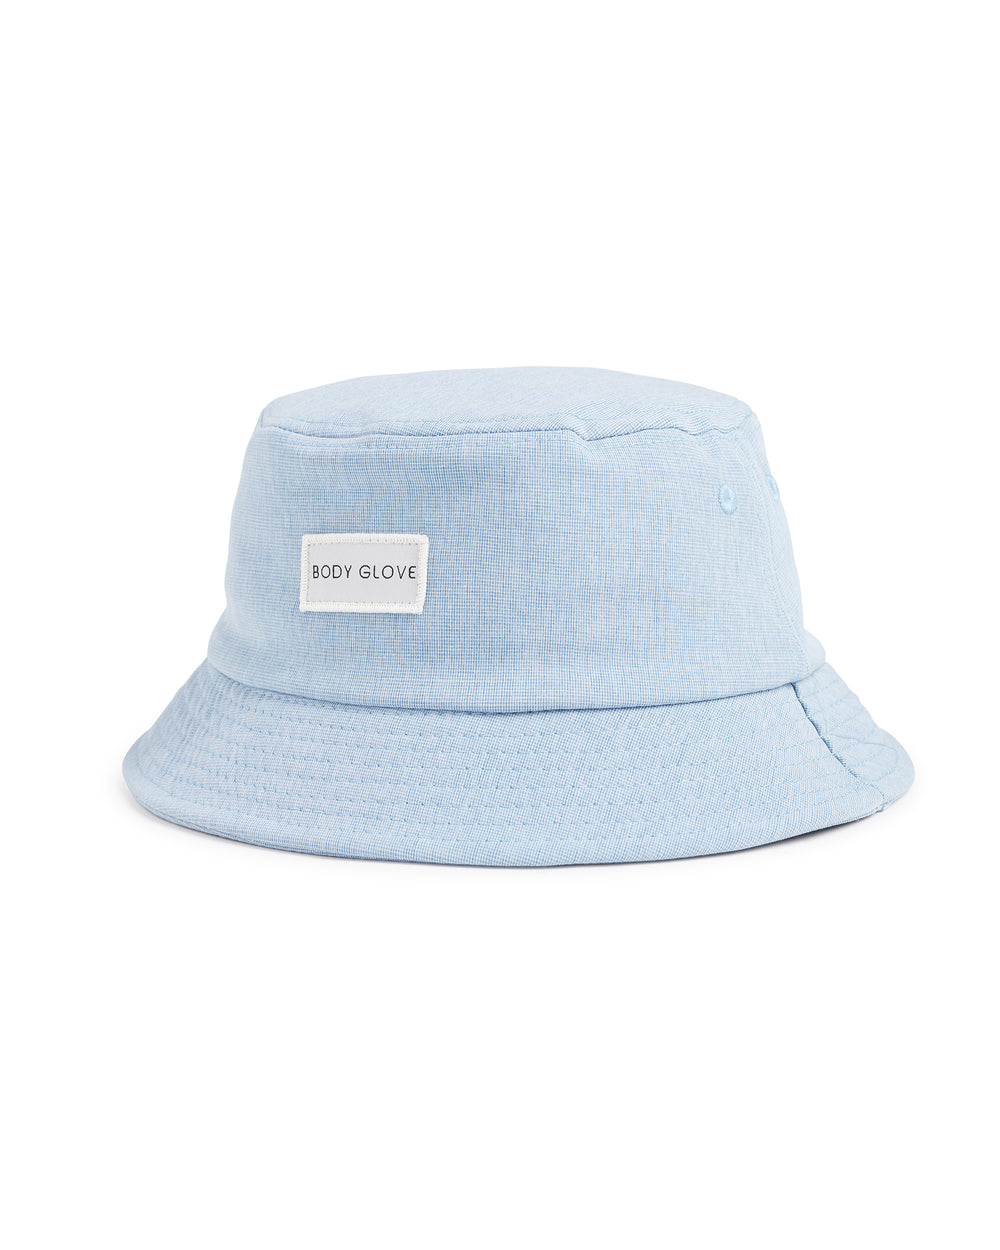 Pesca Bucket Hat - Light Blue